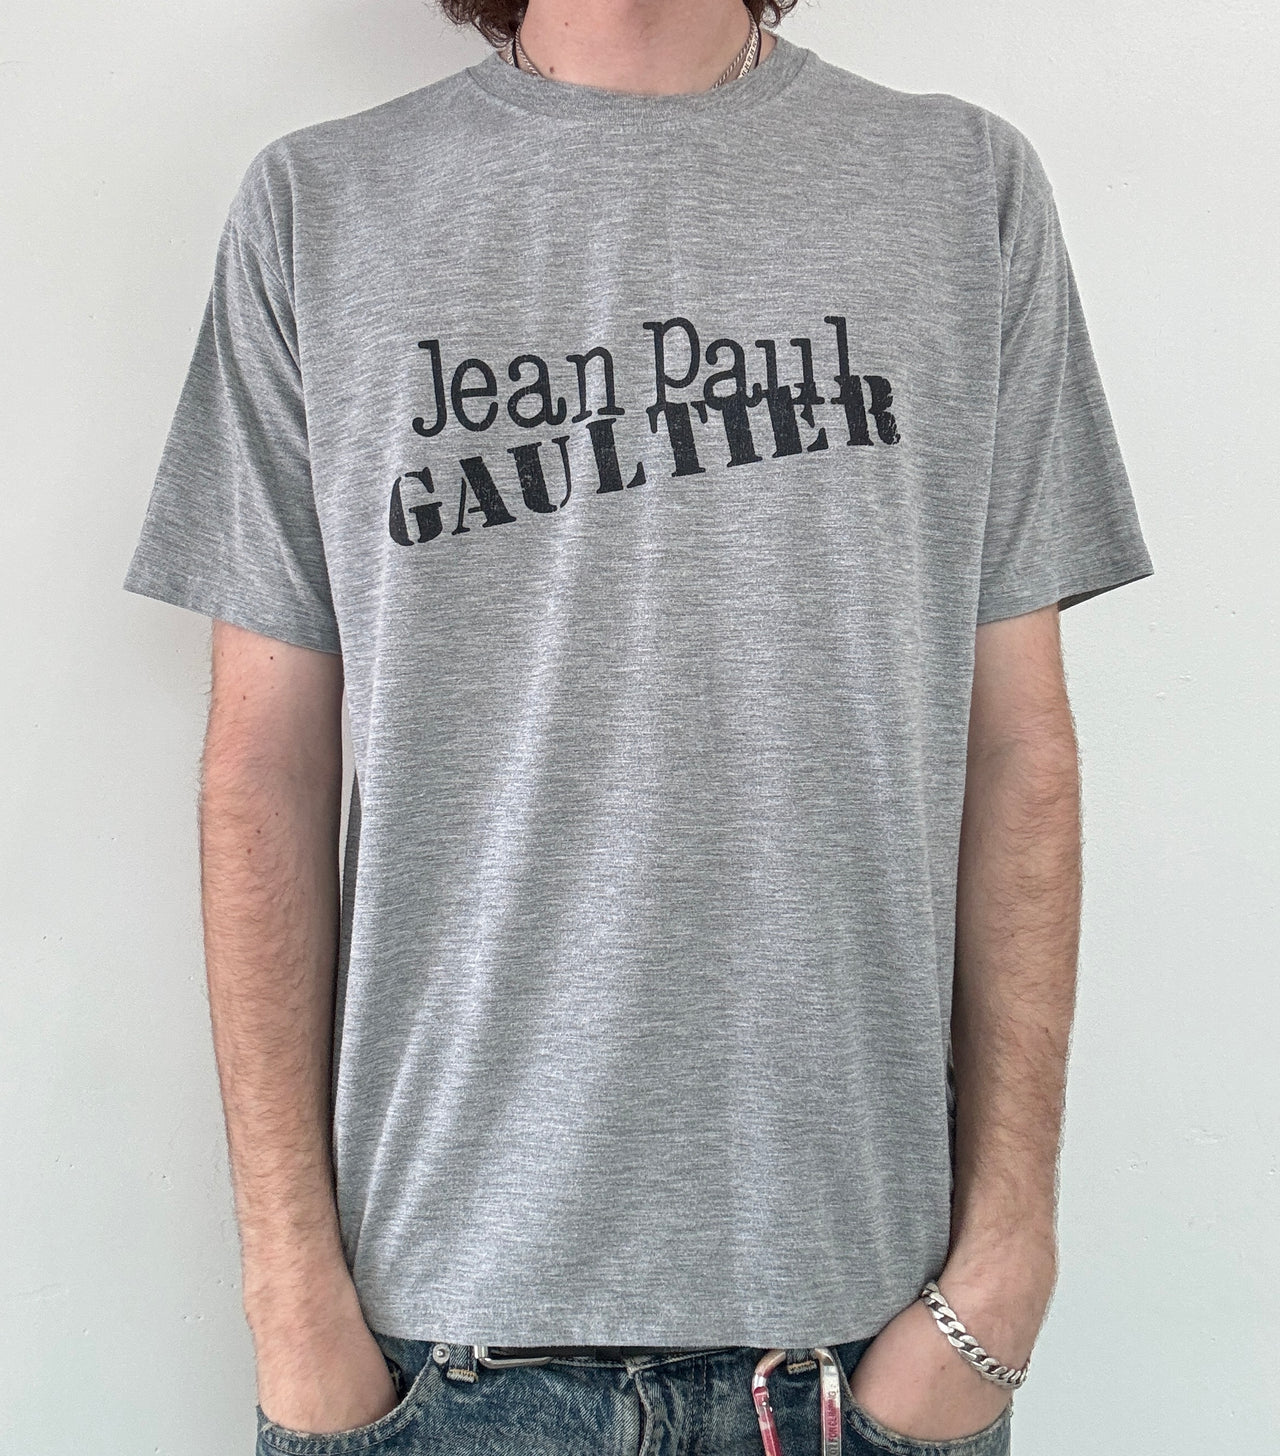 90s Jean Paul Gaultier Tee